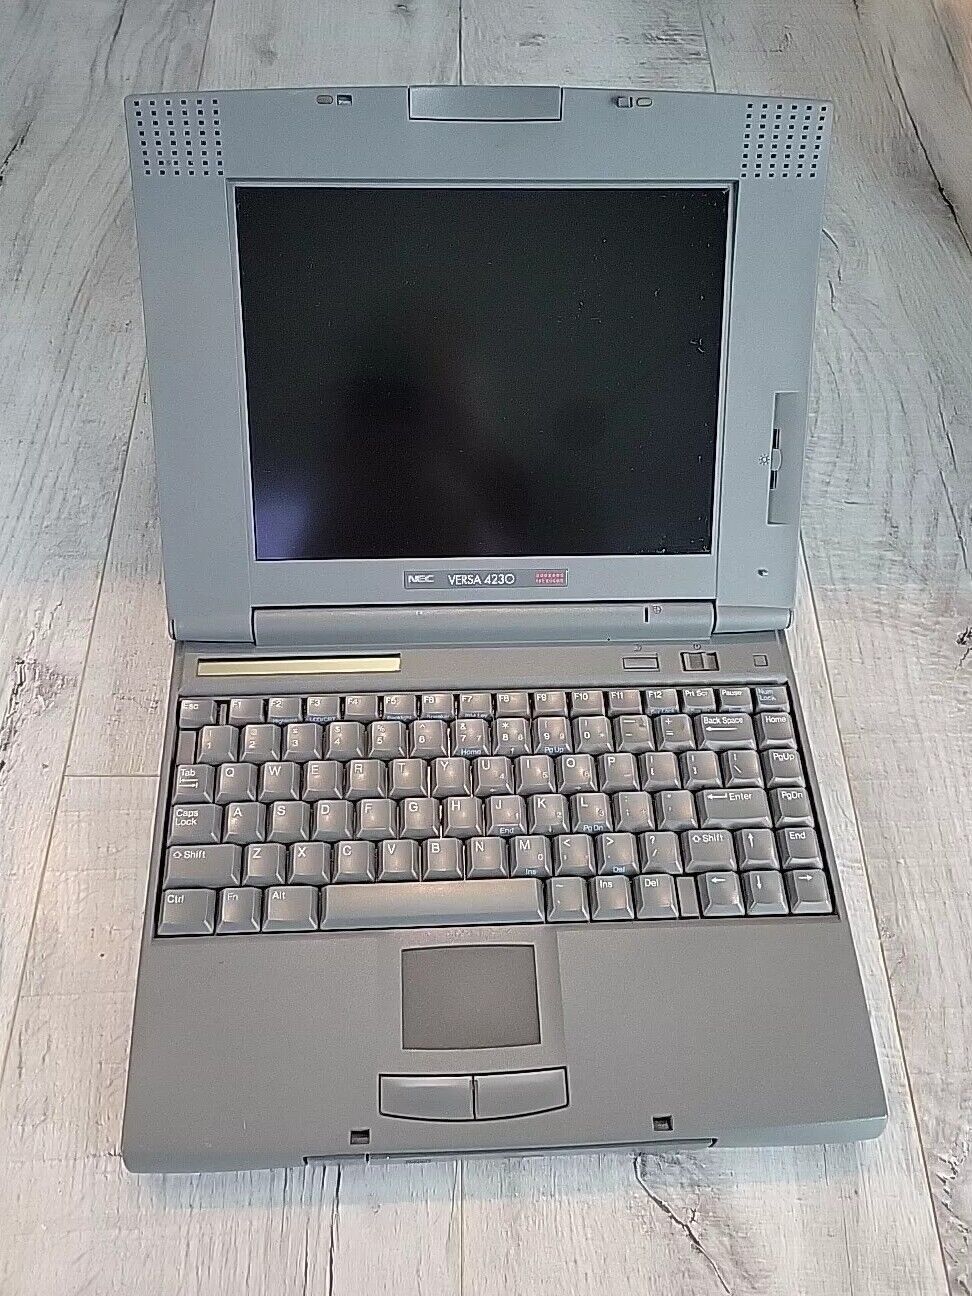 1993 Nec Versa 4230 Laptop Computer Dos Gaming Computer Screen Has Small Crack